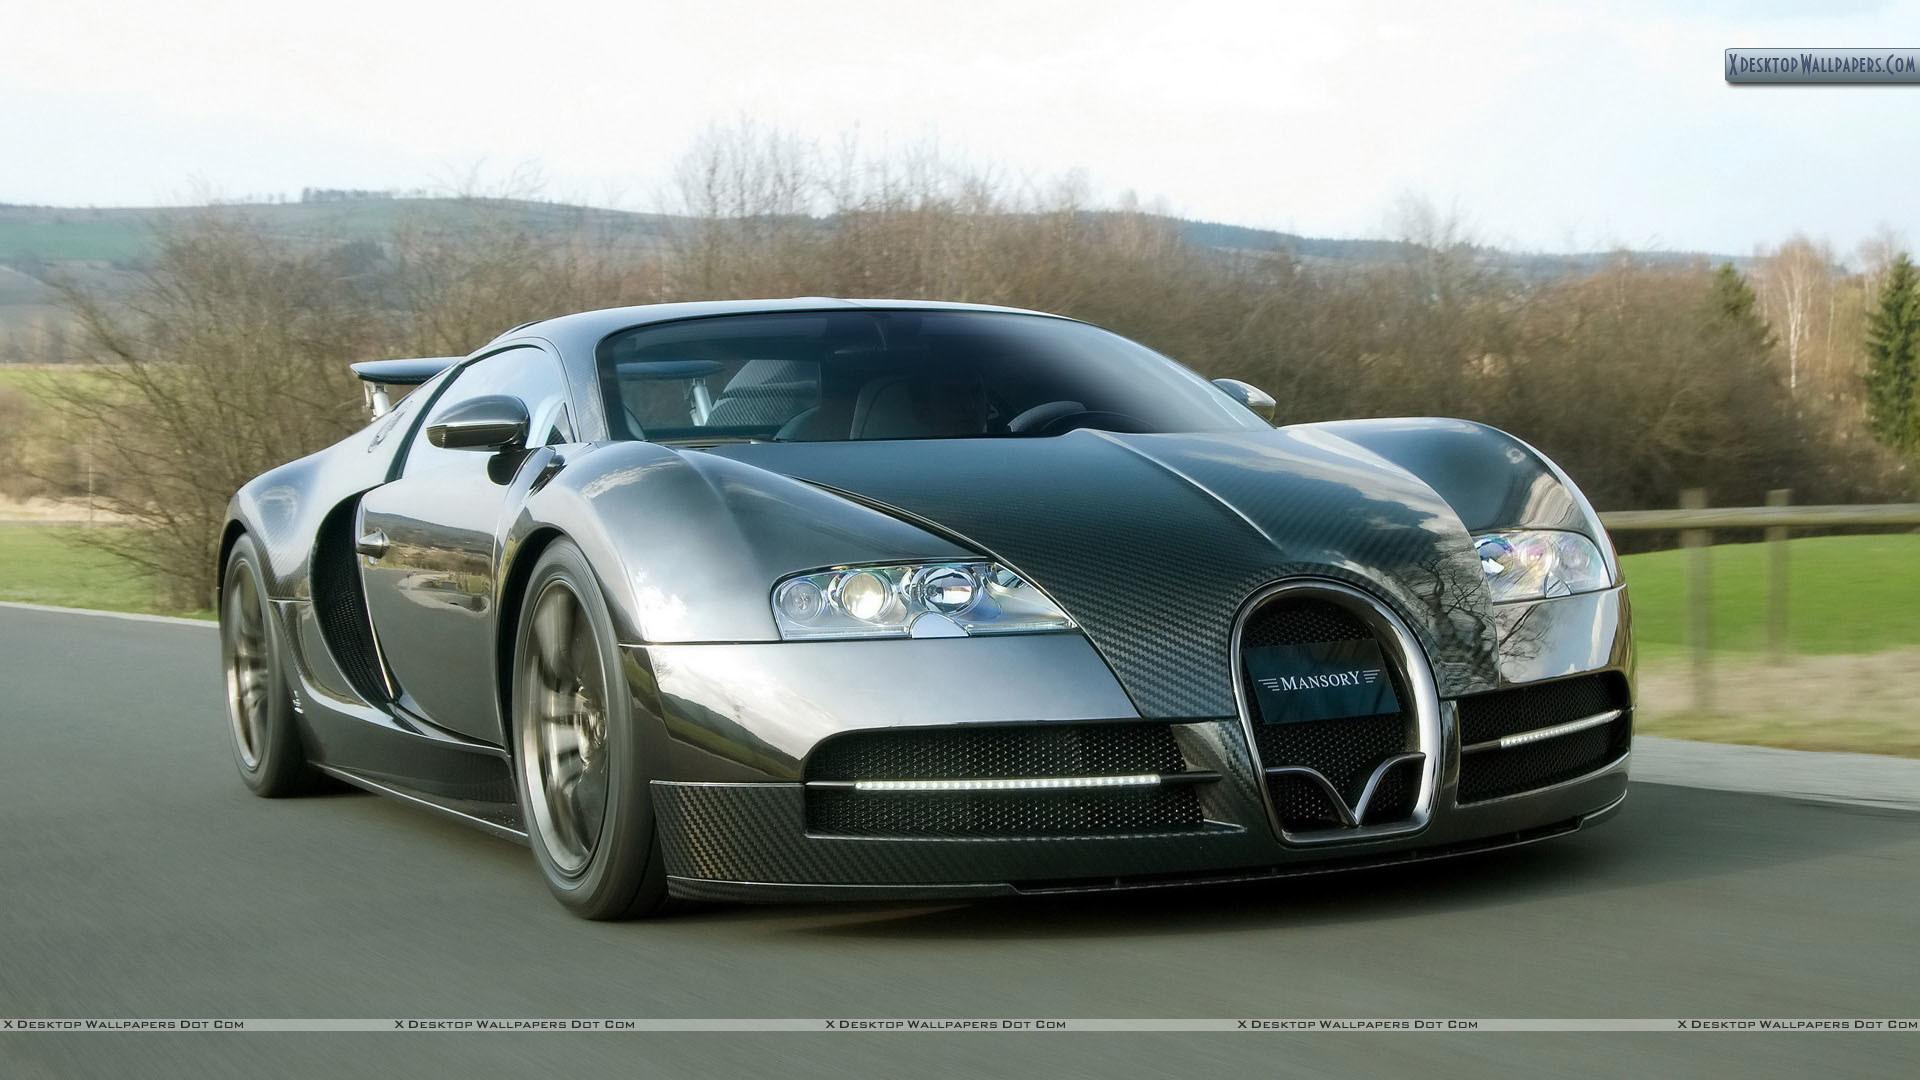 1920x1080 You are viewing wallpaper titled "Mansory Bugatti Veyron ...